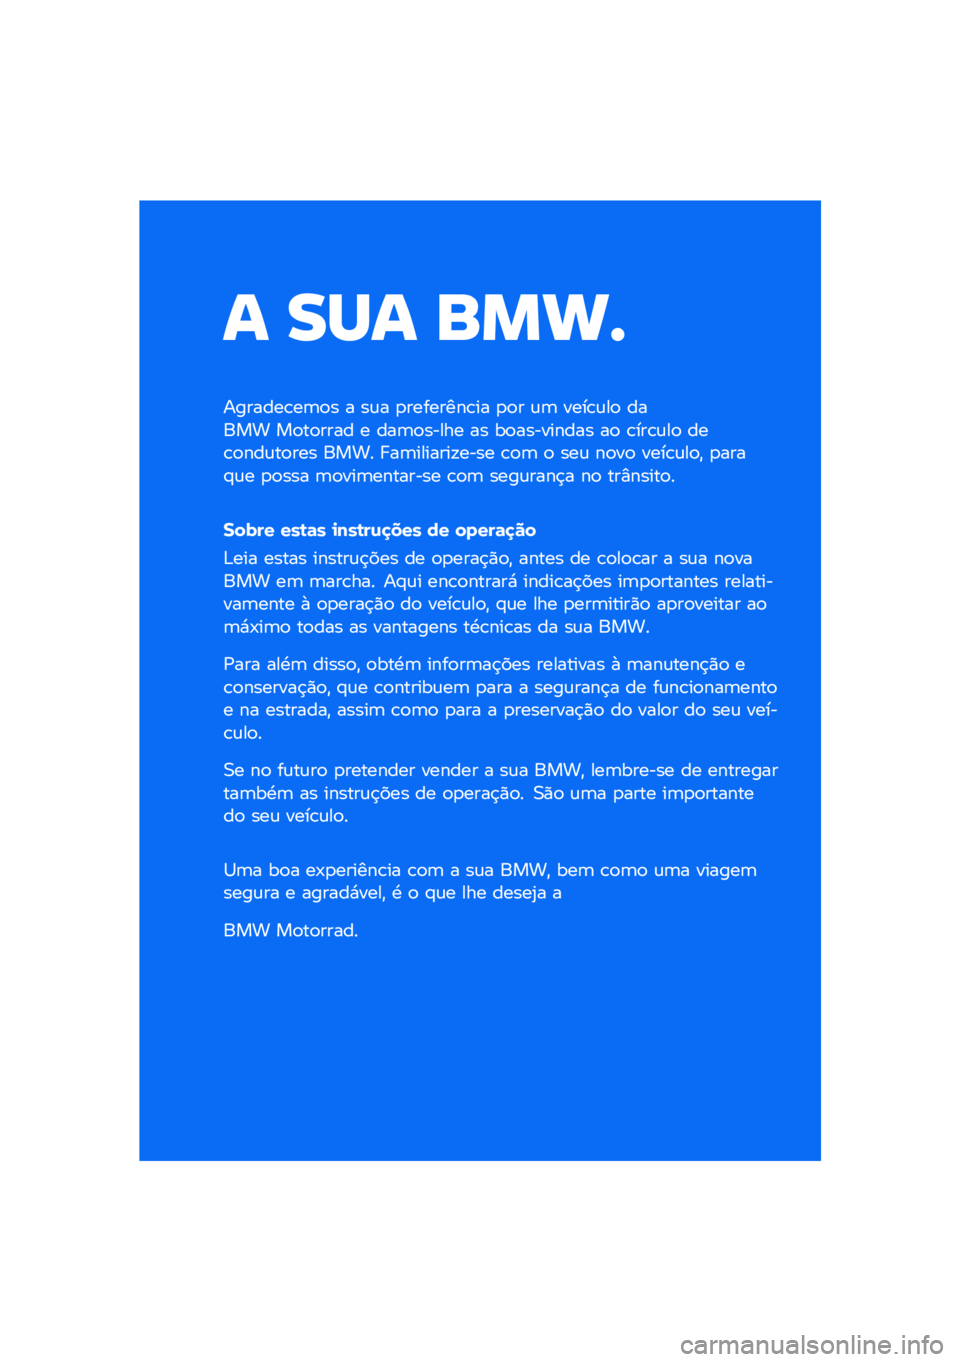 BMW MOTORRAD R NINE T SCRAMBLER 2020  Manual do condutor (in Portuguese) � ��� ����\b
�������\b��	�
� � ��\f� �
��������\b�� �
�
� �\f�	 ����\b�\f��
 ����� ��
��
���� � ���	�
����� �� ��
��������� ��
 �\b���